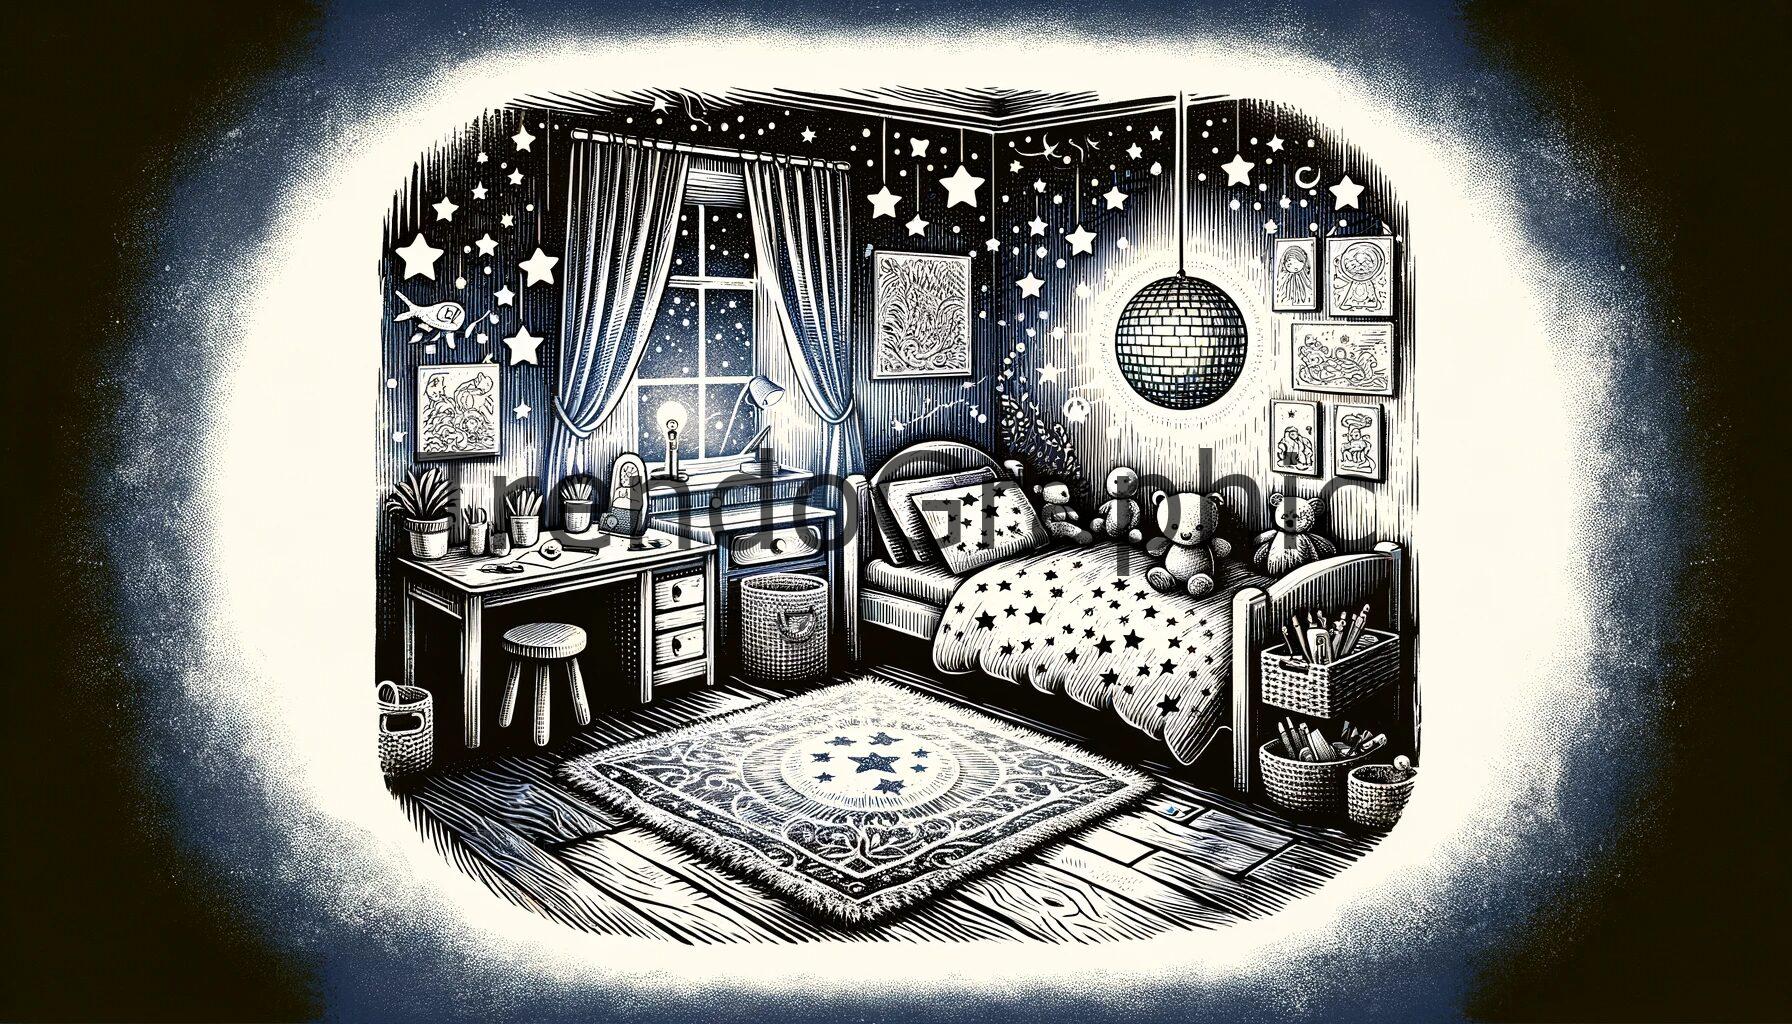 Starry Night in a Child’s Room: Mini Disco Ball Magic